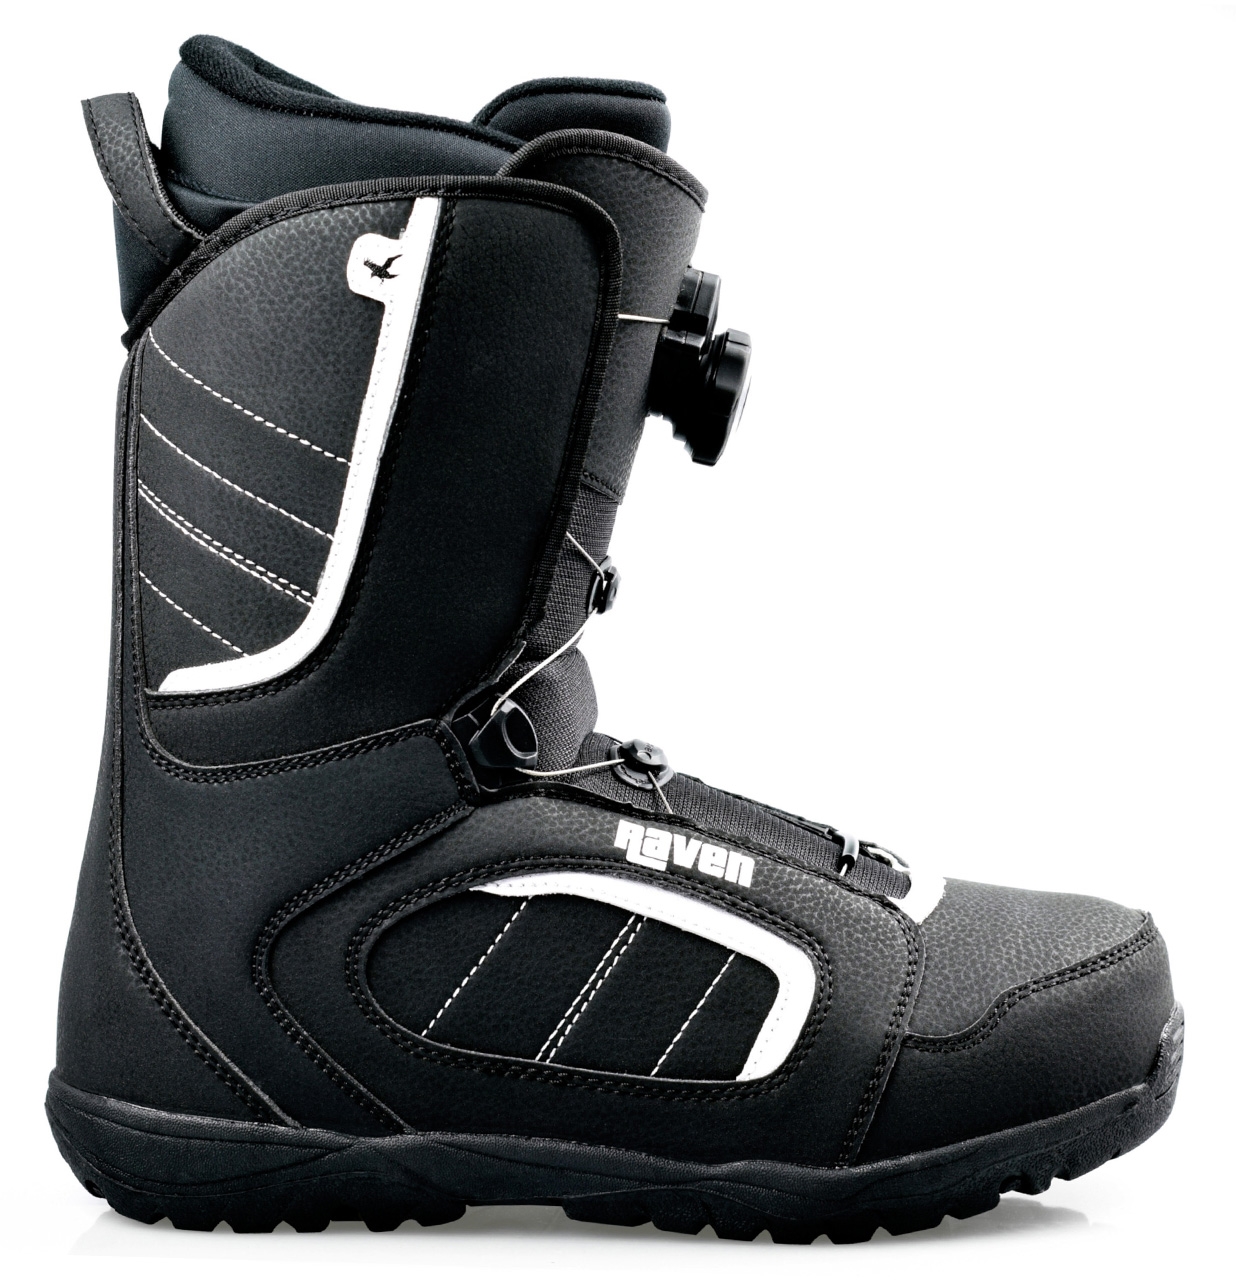 Boots Target RAVEN snowboard